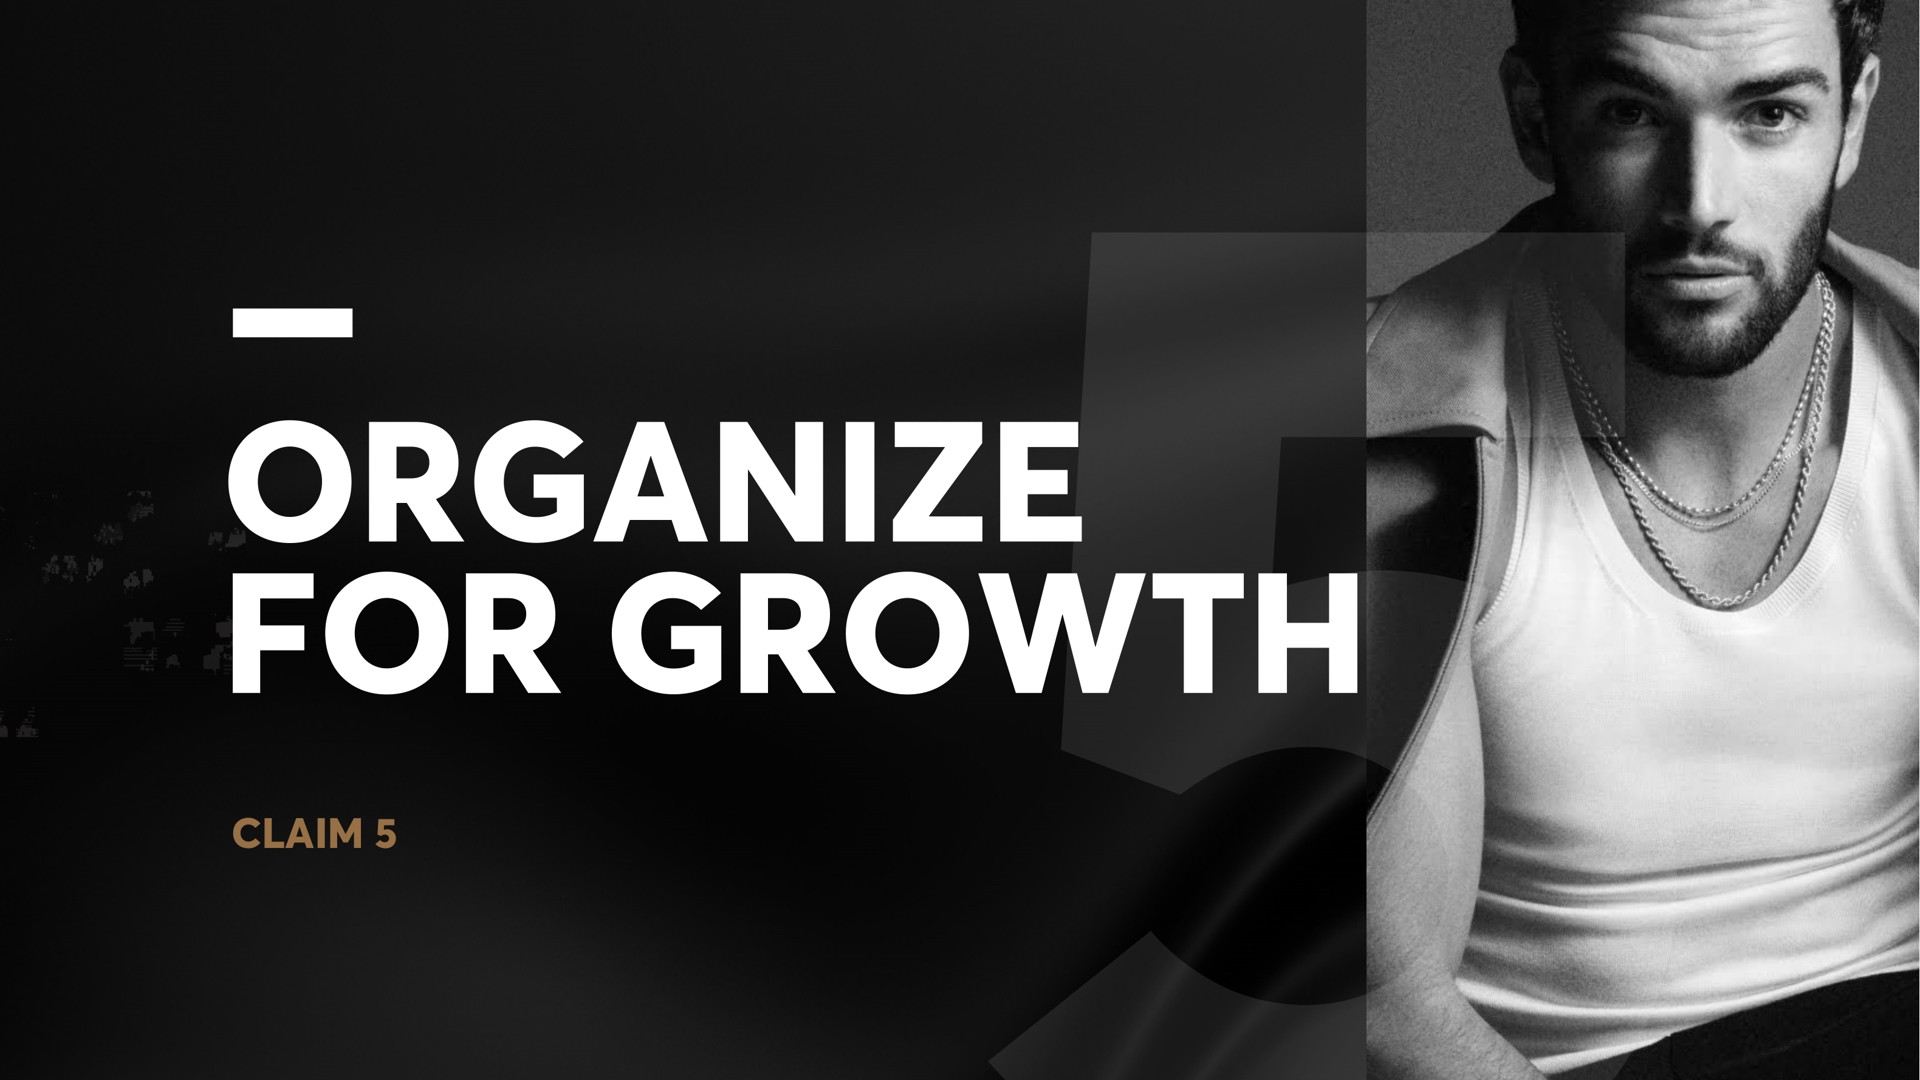 i organize for growth | Hugo Boss